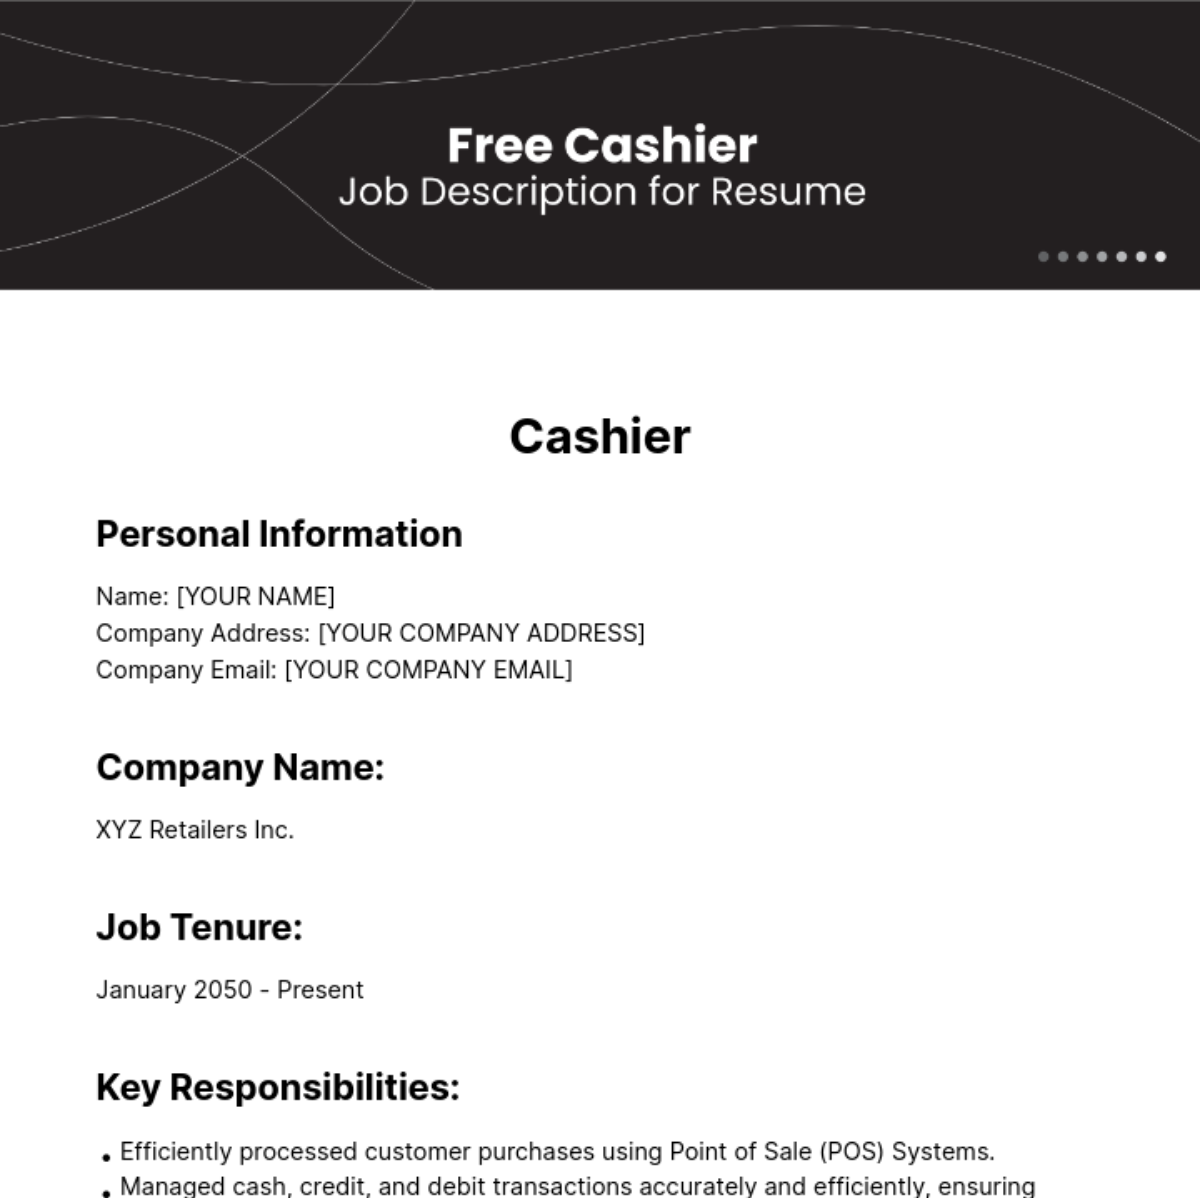 Cashier Job Description for Resume Template